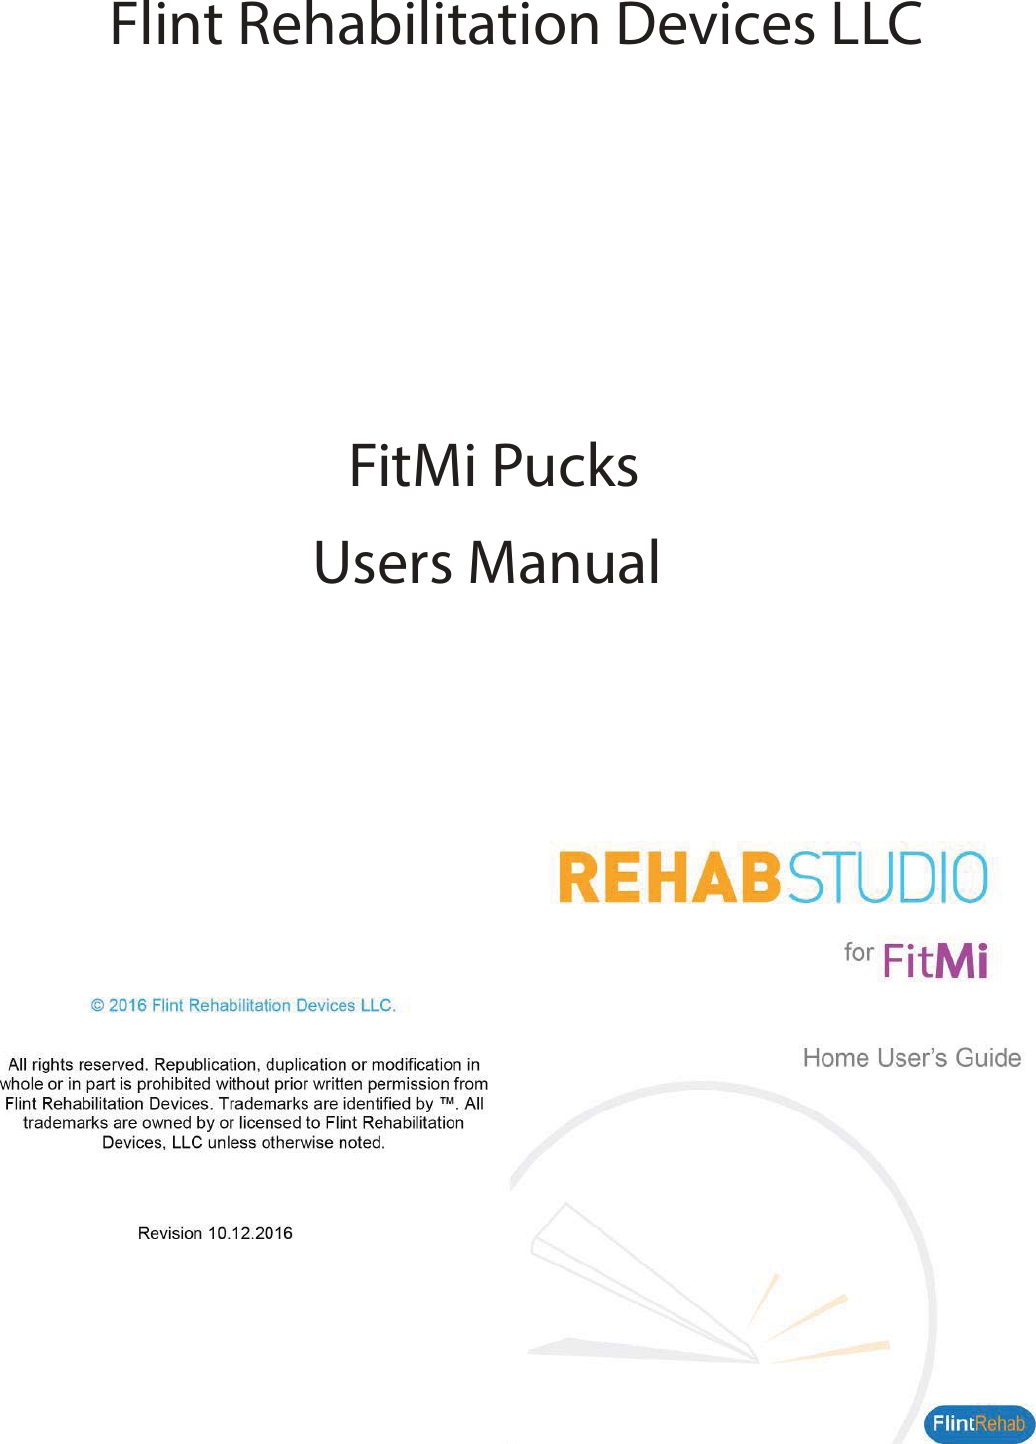 Flint Rehabilitation Devices LLCFitMi PucksUsers Manual